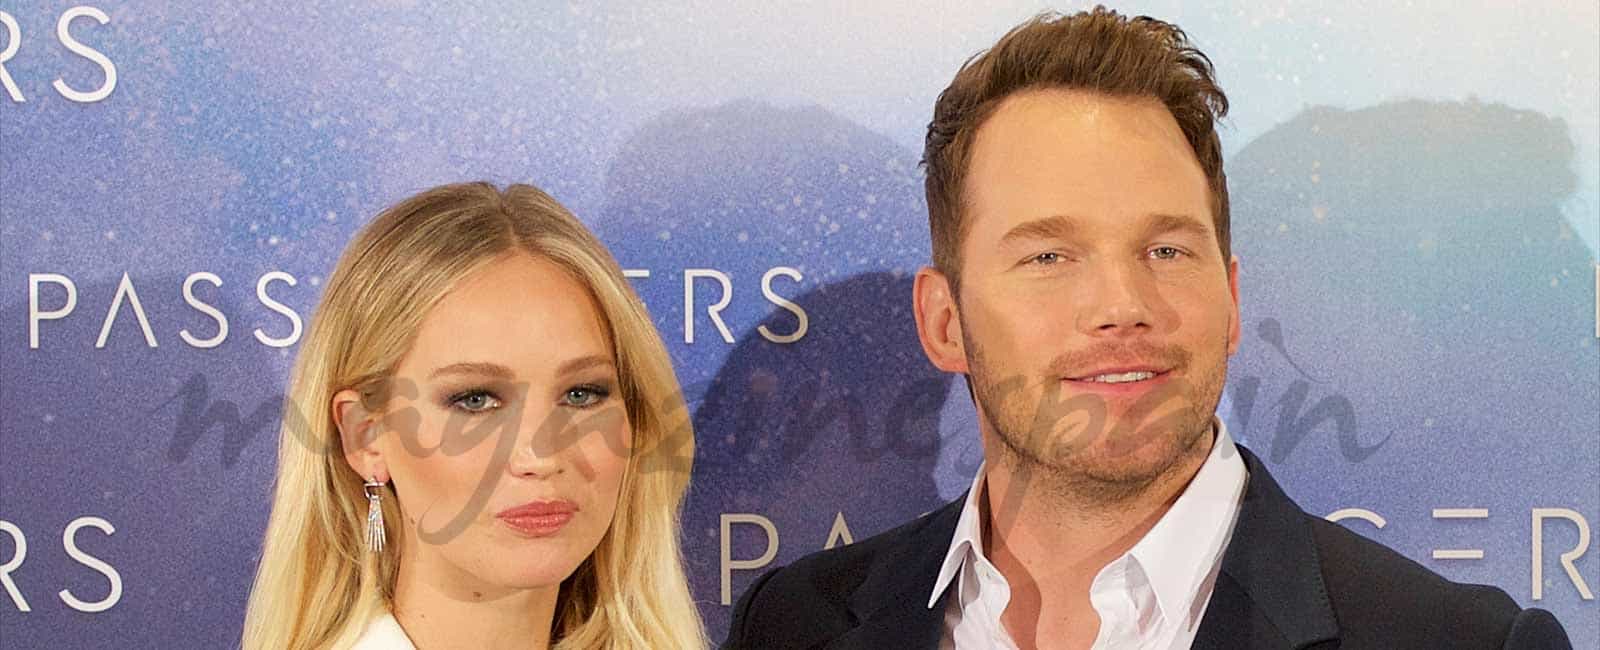 Jennifer Lawrence y Chris Pratt presentan en Madrid, “Passengers”